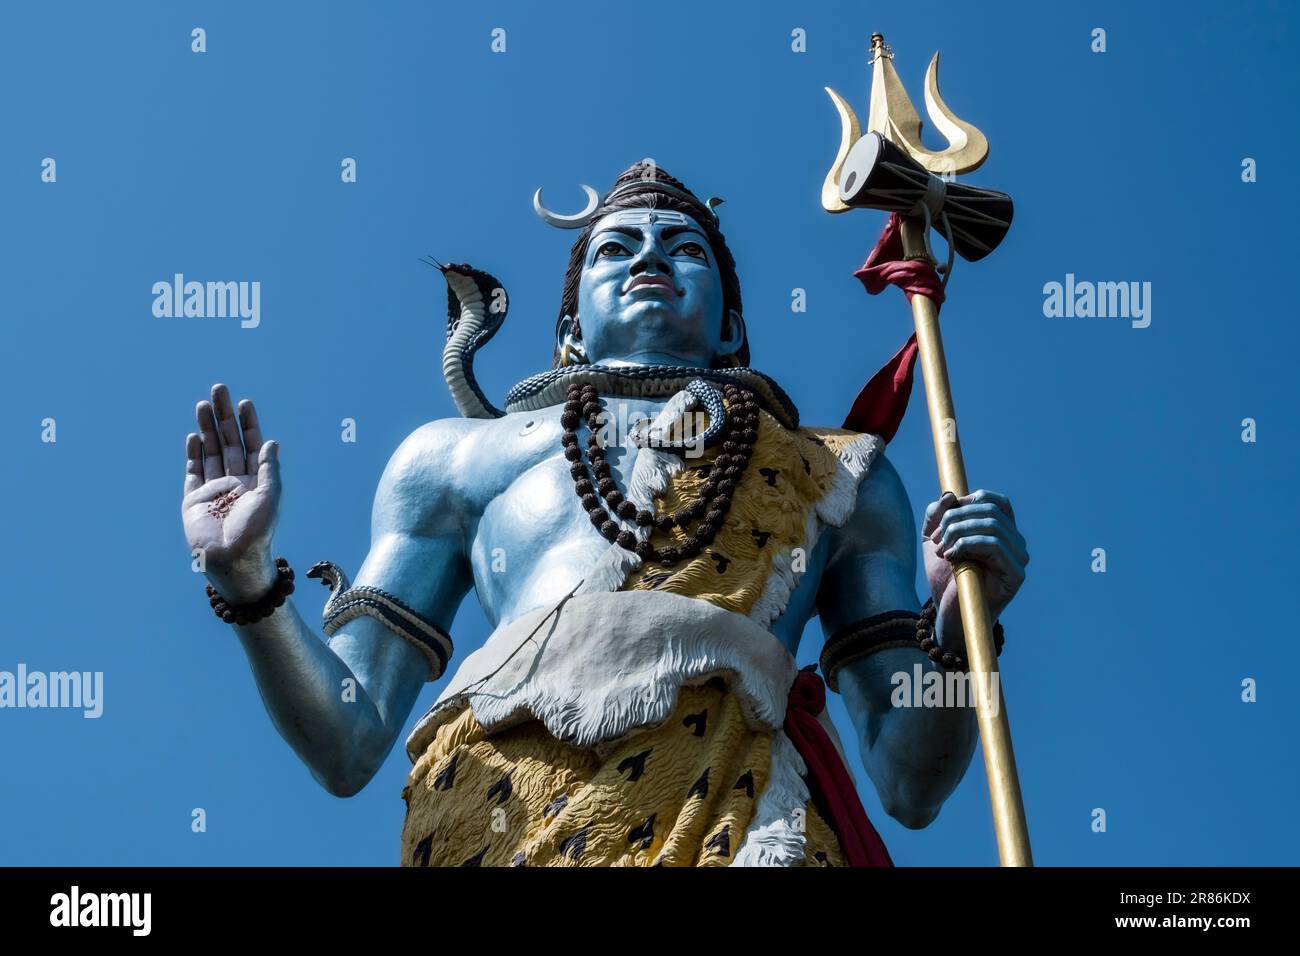 A large Shiva statue in Haridwar, India Stock Photo